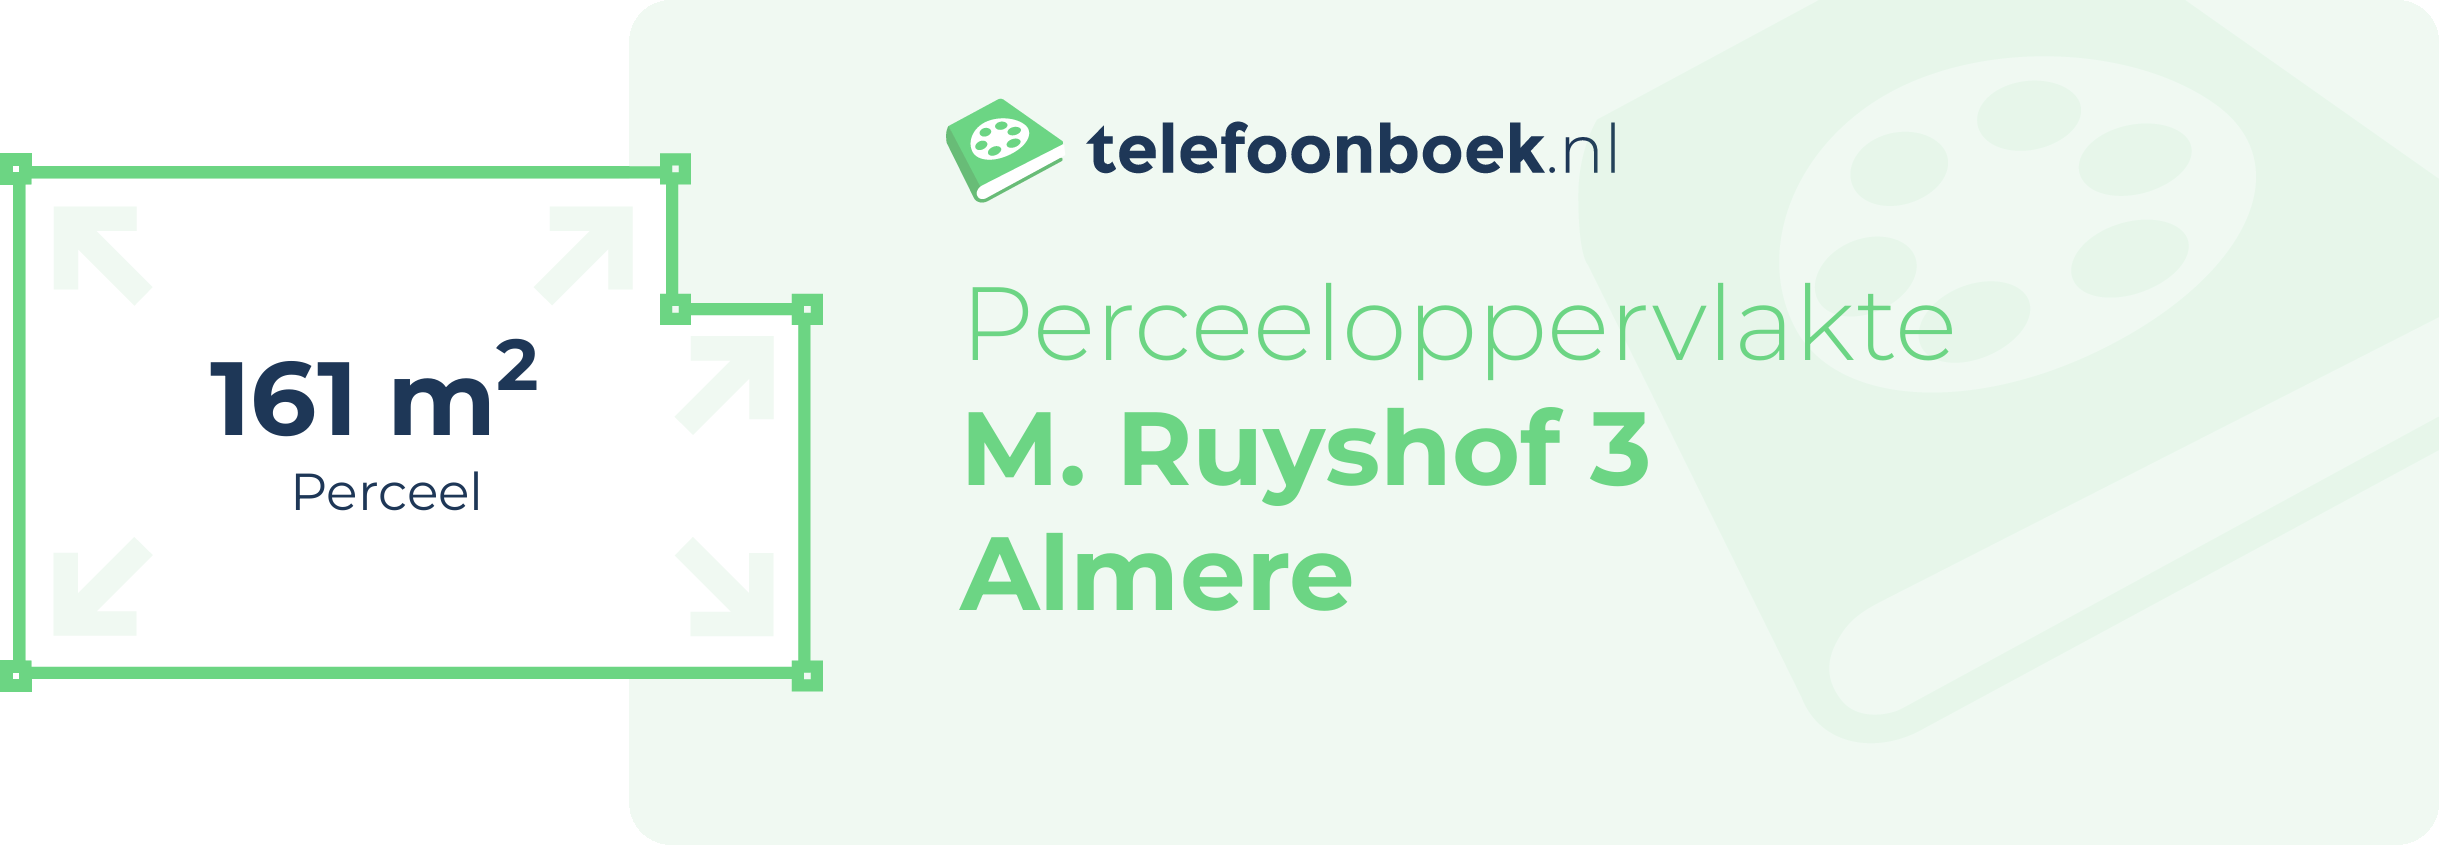 Perceeloppervlakte M. Ruyshof 3 Almere